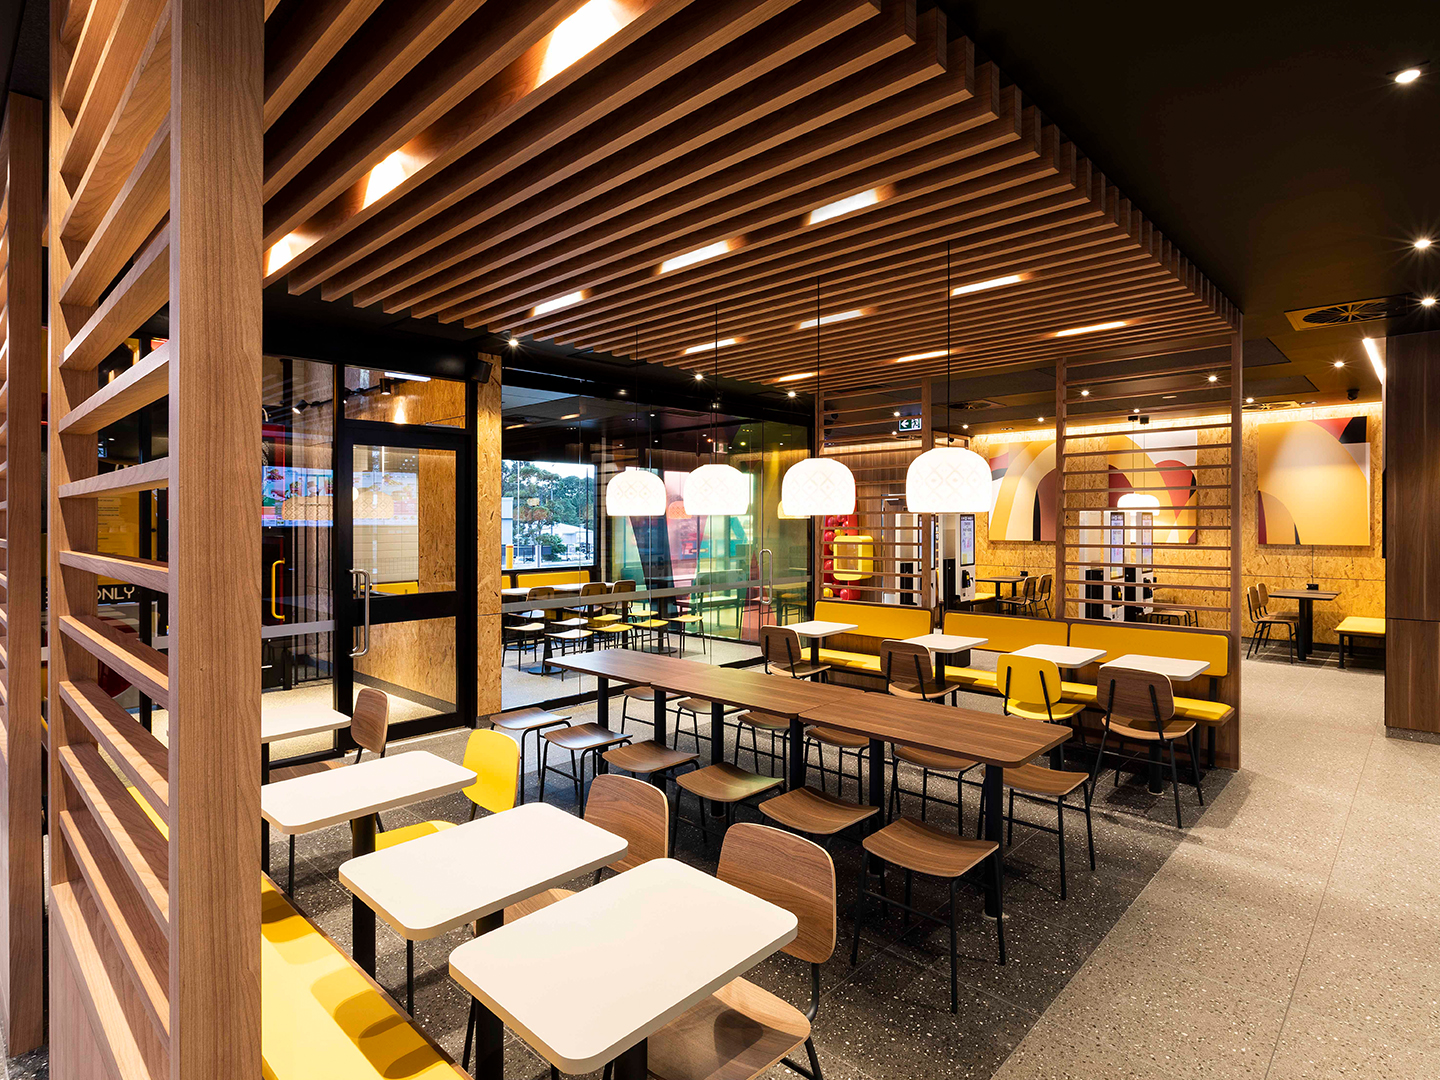 Restaurant Design - Custom Restaurant Furniture - McDonald's Touch of Archery - Custom Fixtures - Custom Furniture - Restaurant Industry